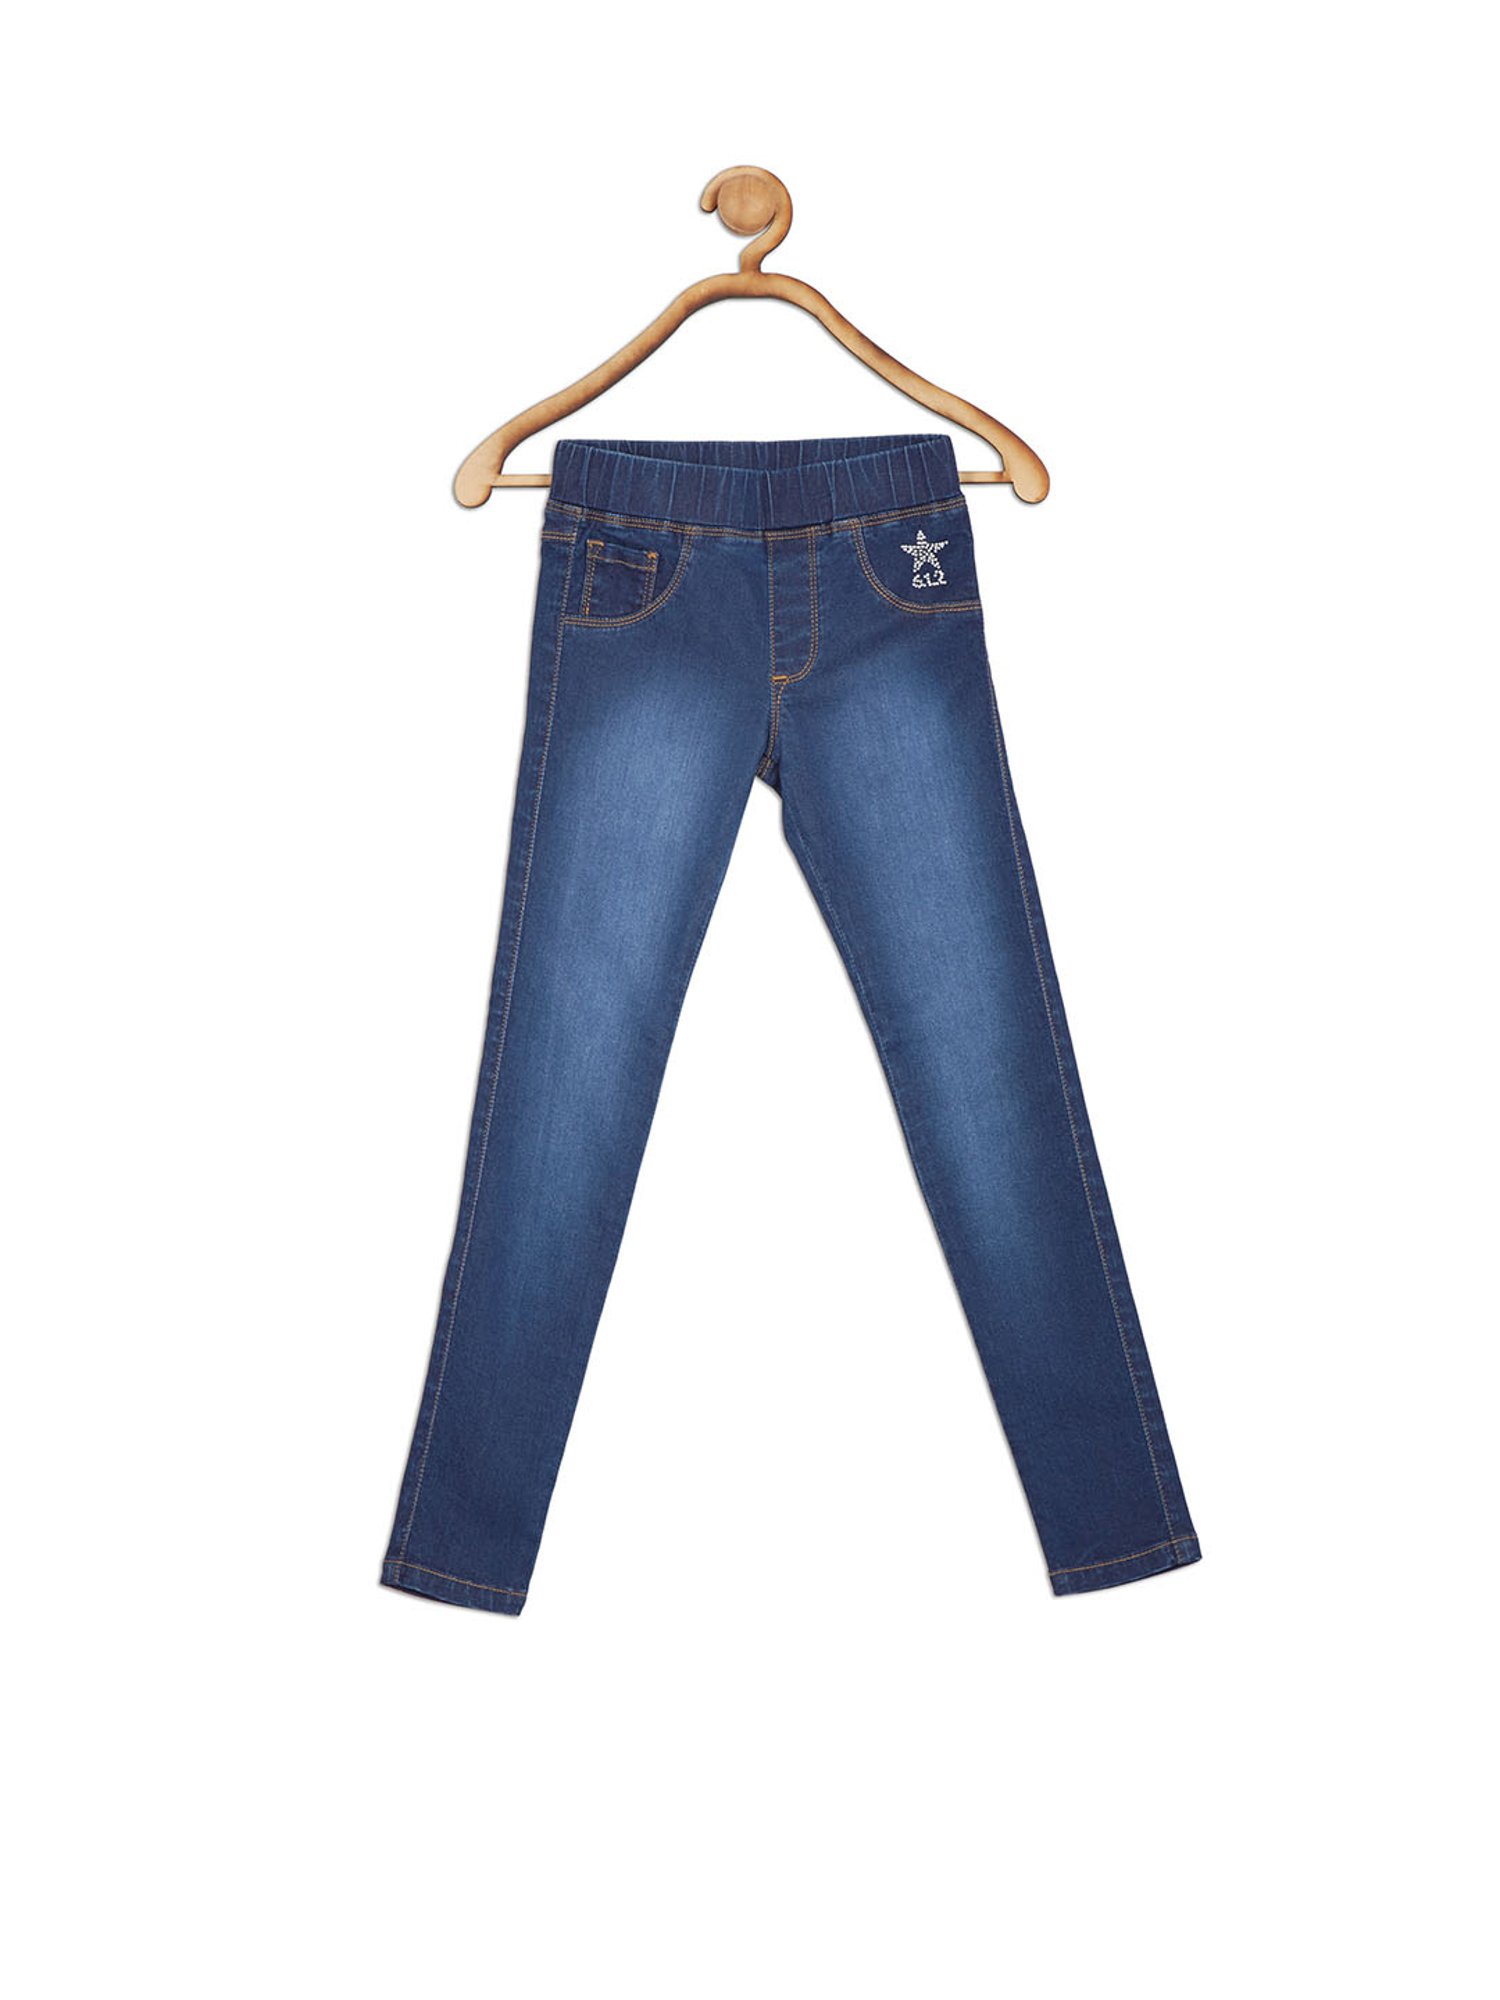 Buy 612 LEAGUE Girls 4 Pocket Coated Jeans